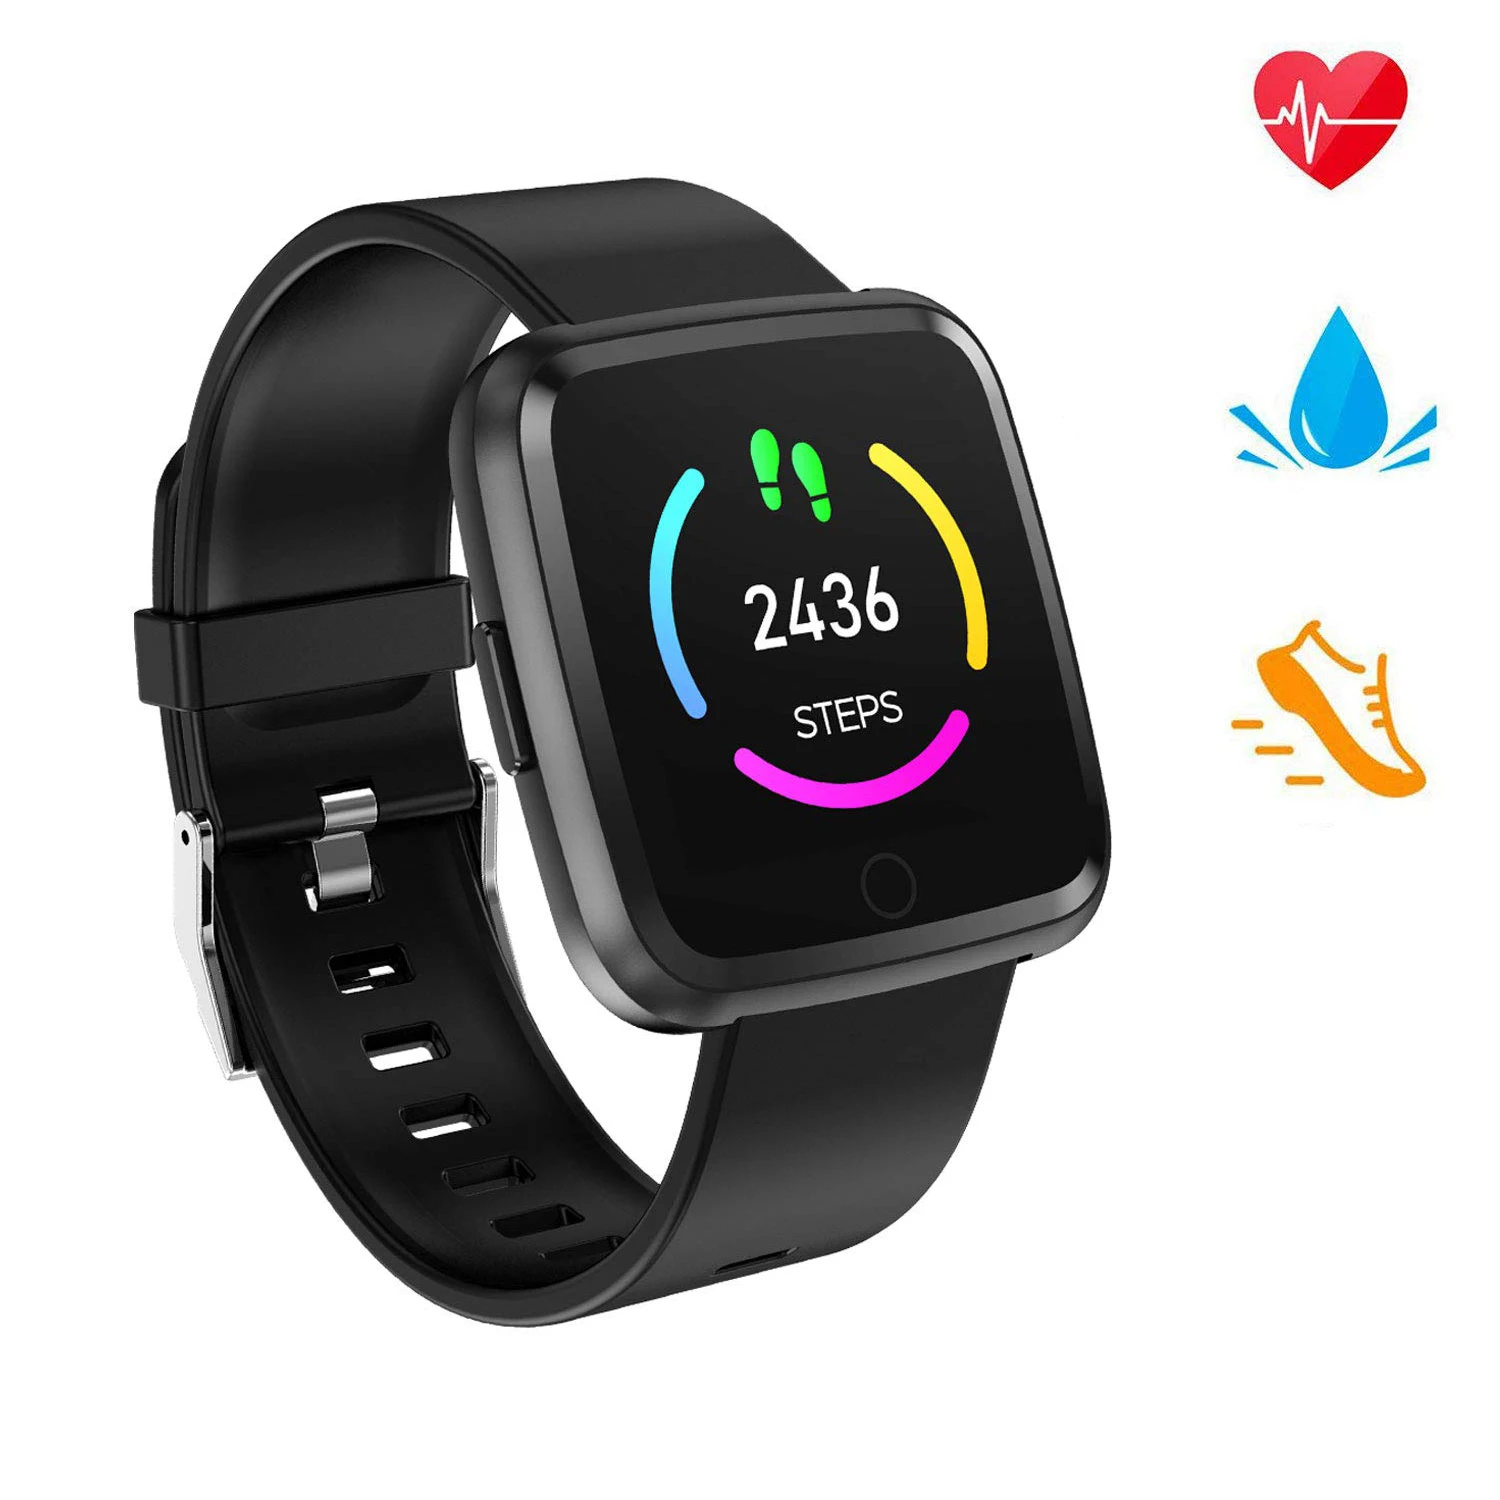 

relogio inteligente ios smart watch, deportivo bluetooth impermeable ip67 resistente al agua reloj inteligente a prueba de agua, Black blue green purple